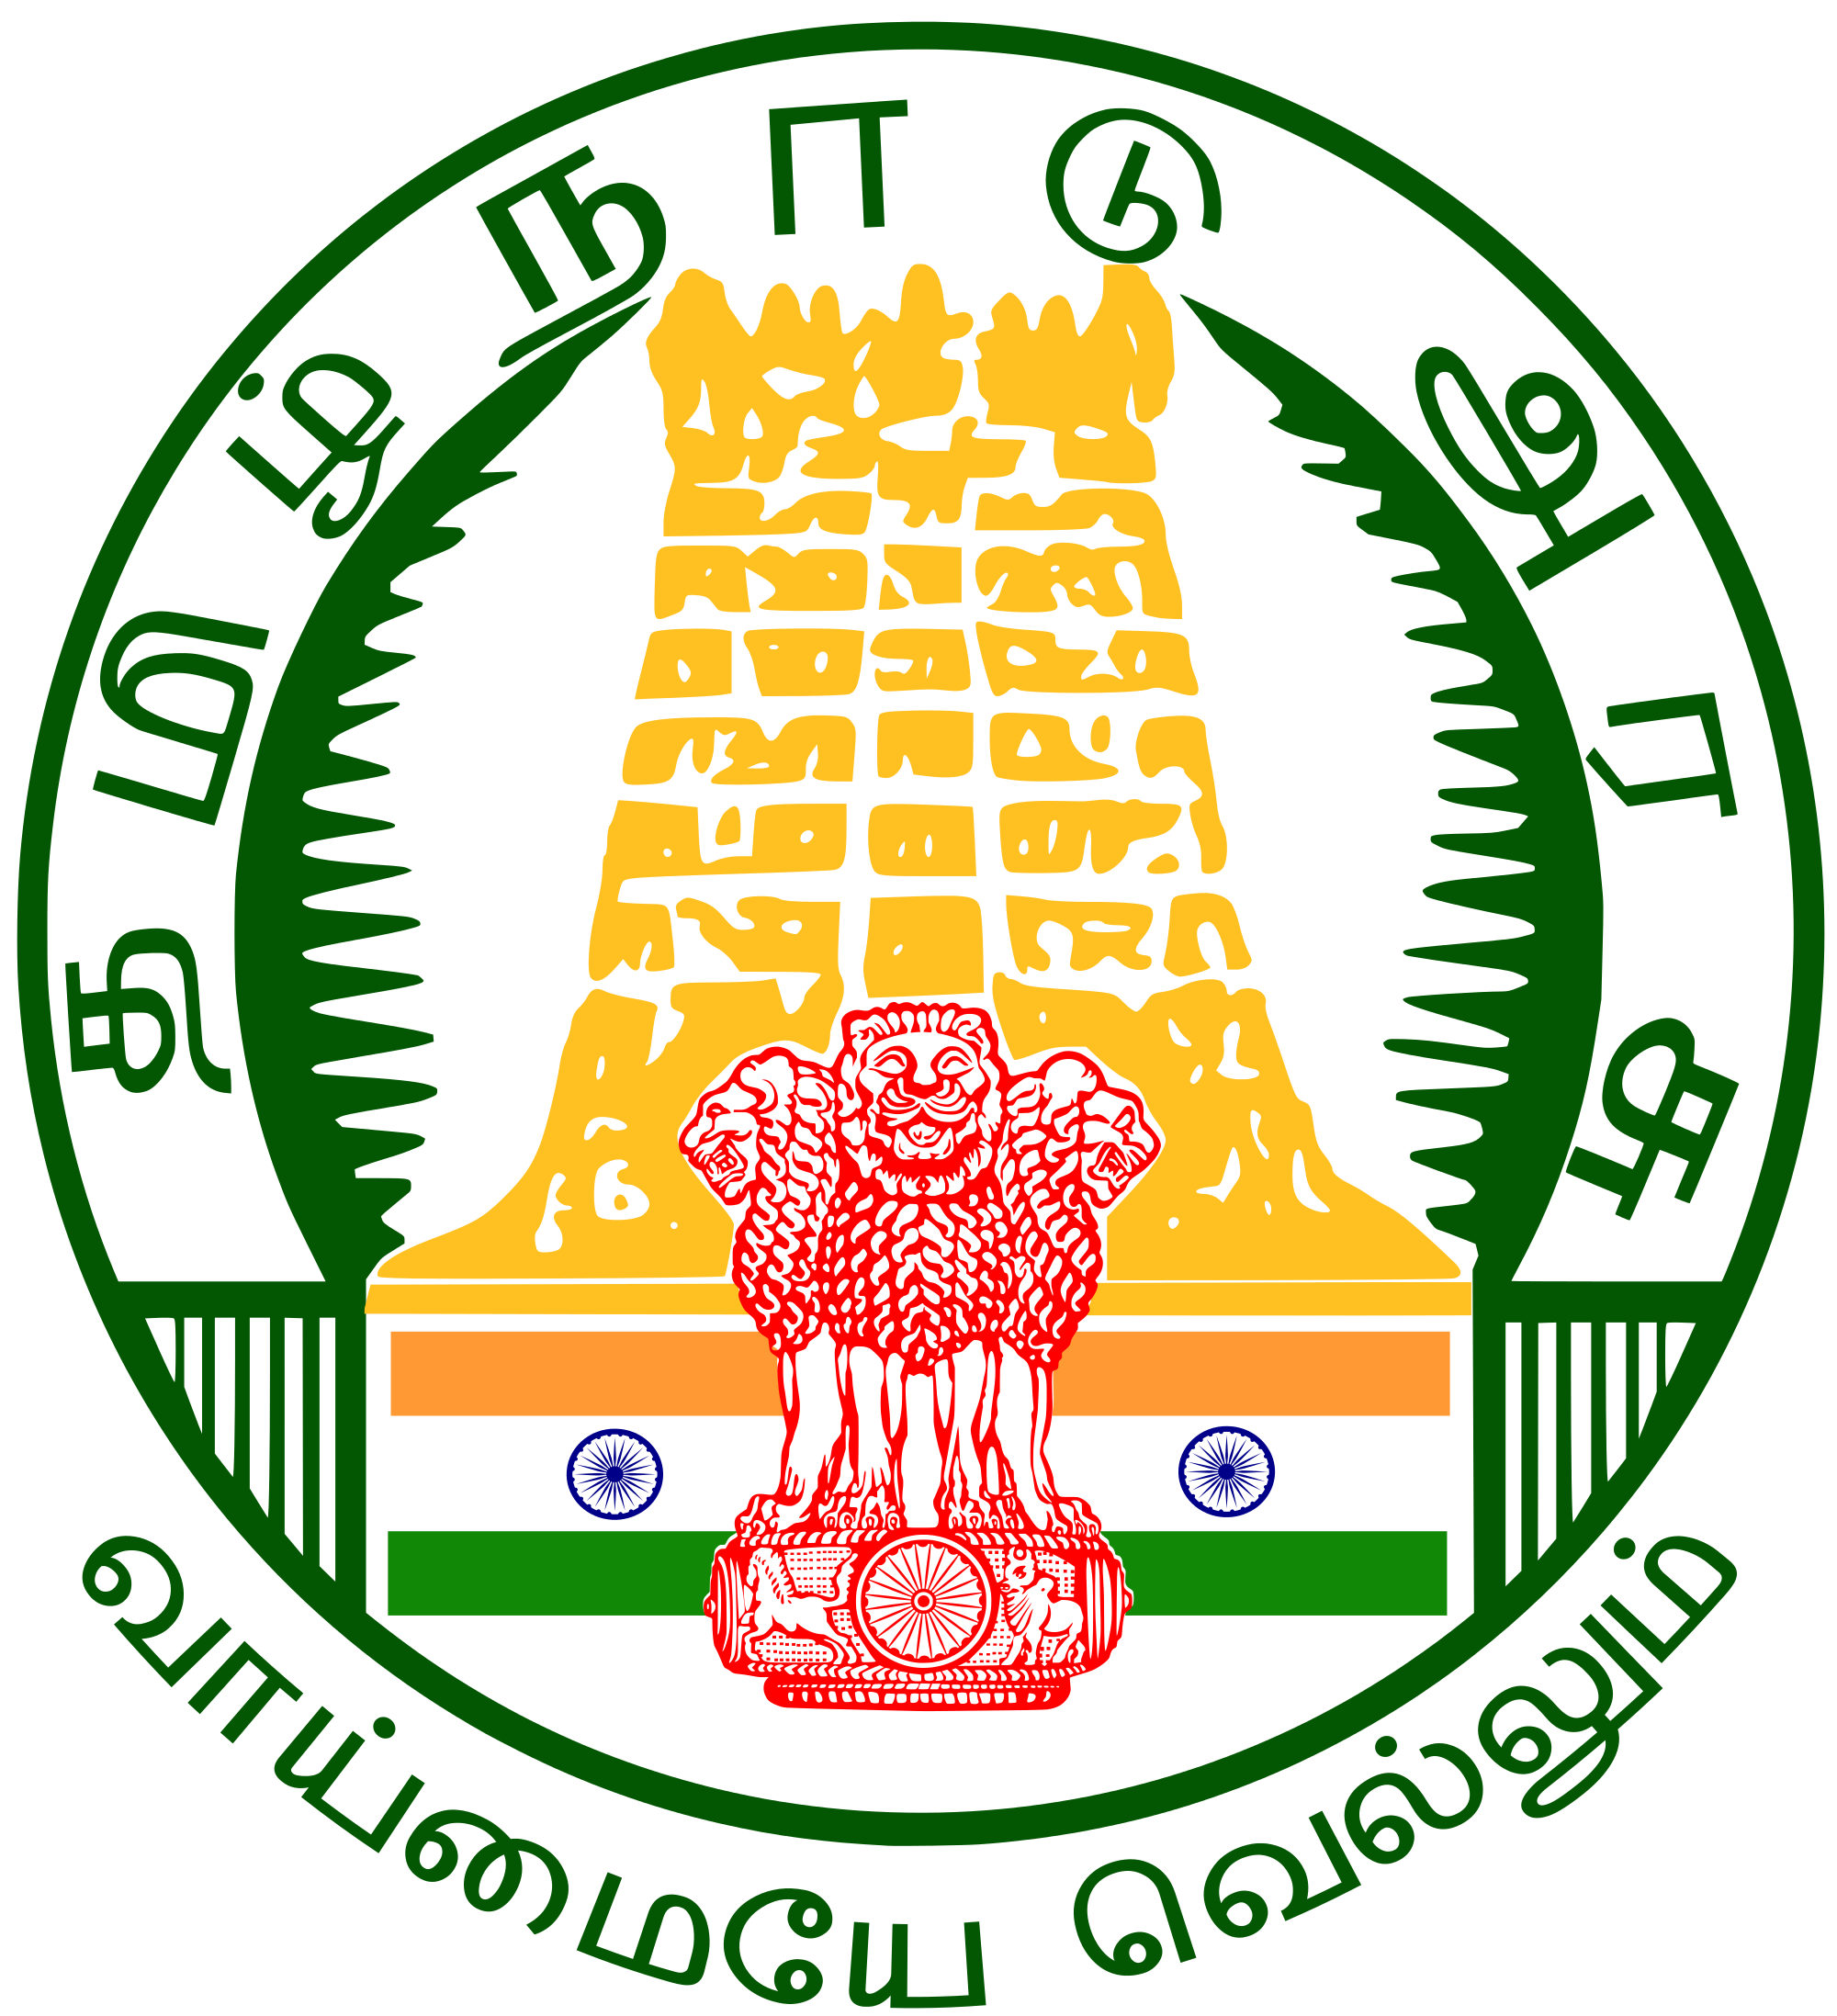 Tamil Nadu Legislative Assembly - Wikipedia, the free encyclopedia